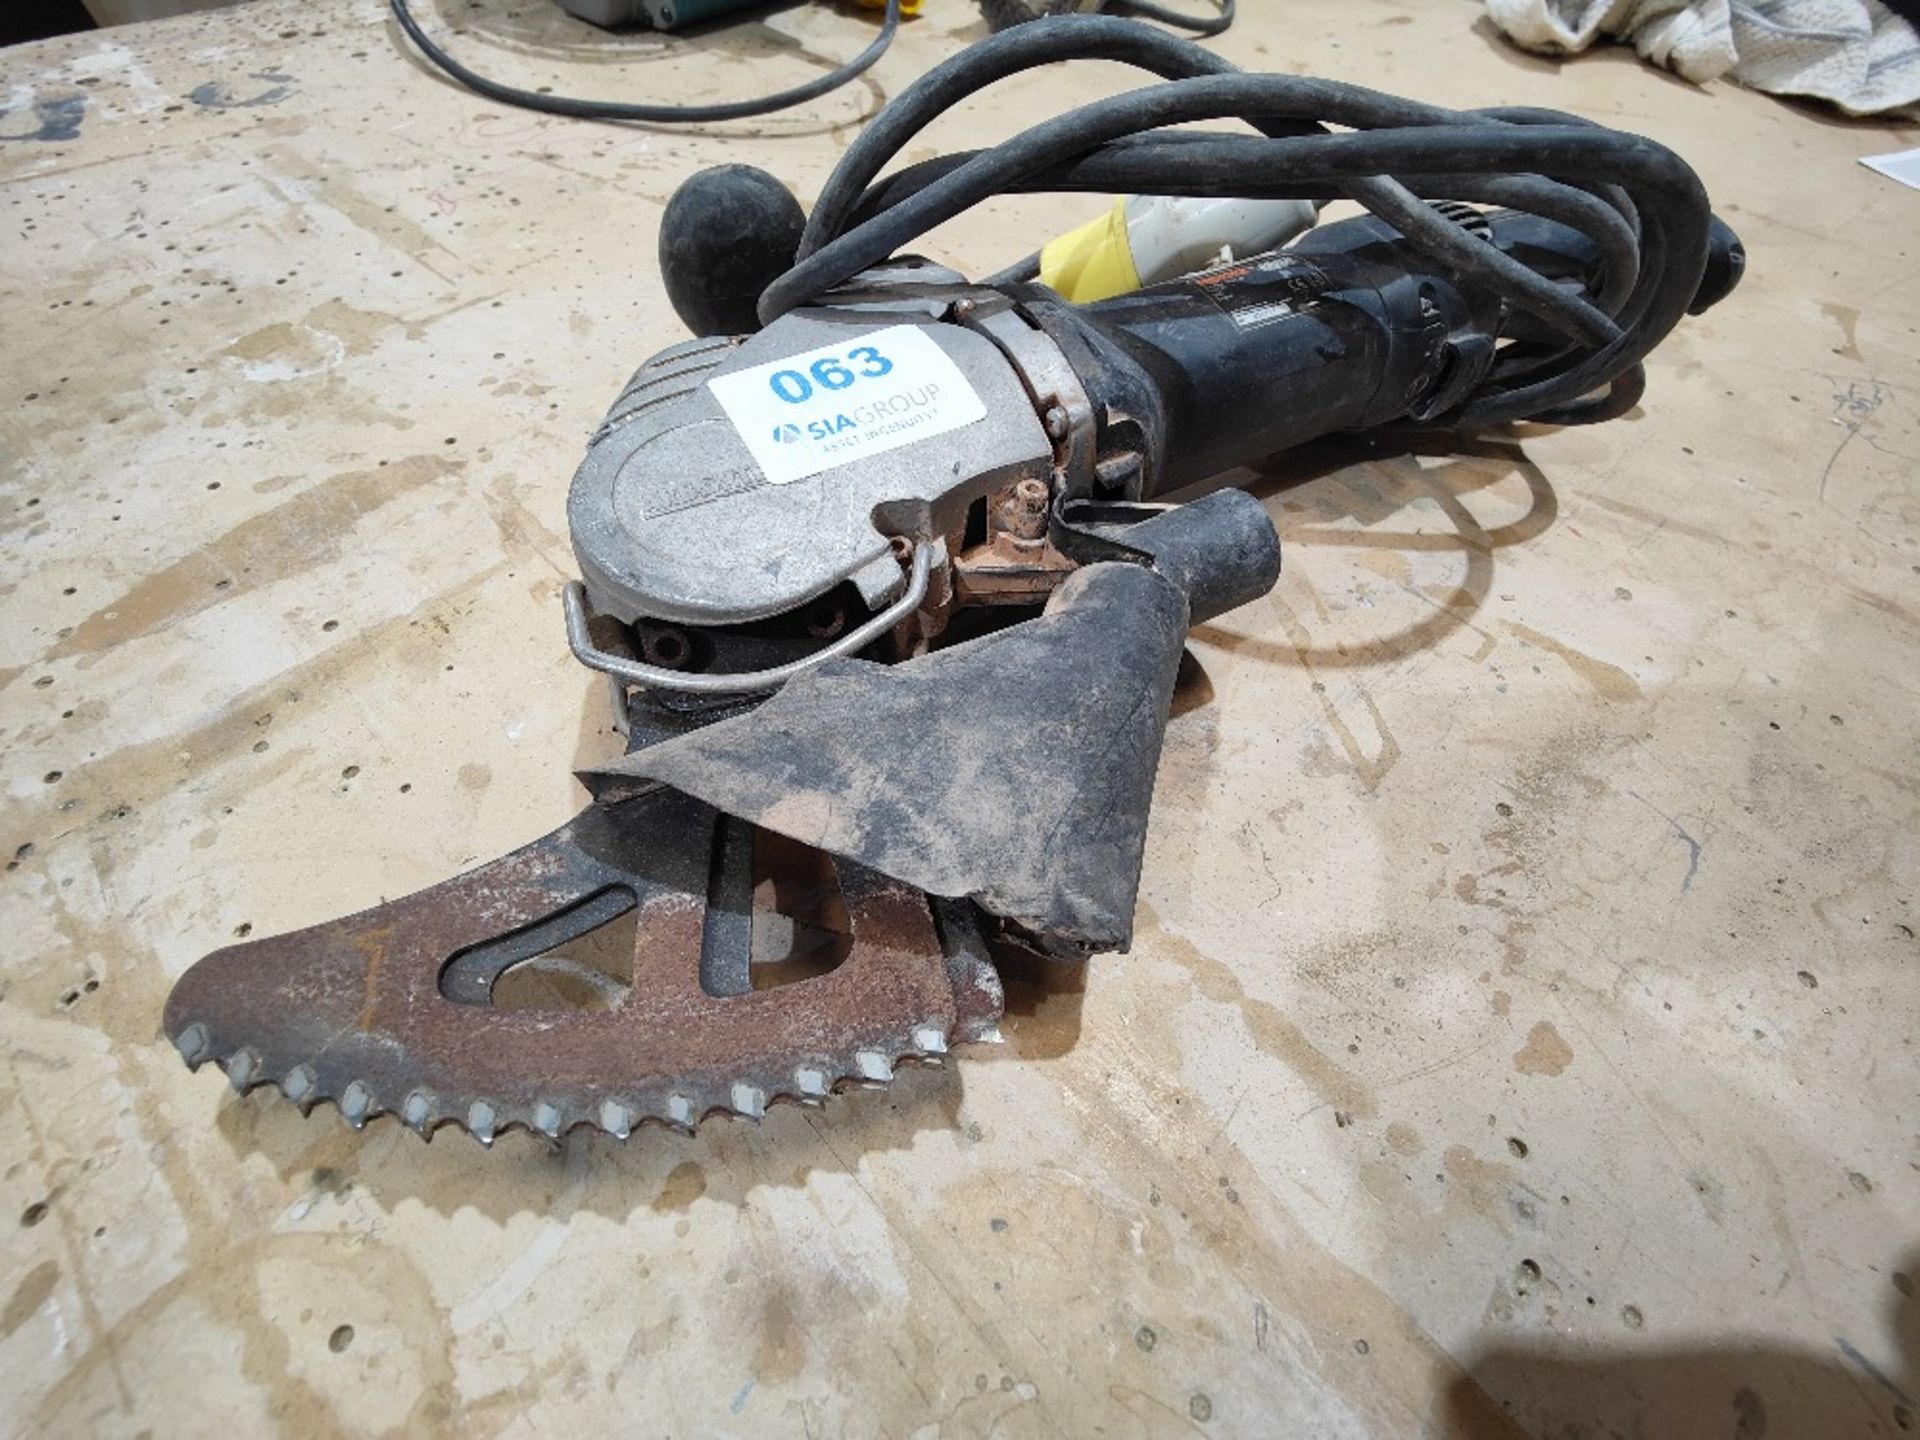 Arbortech AS 170 110V brick and mortar saw - Image 2 of 3